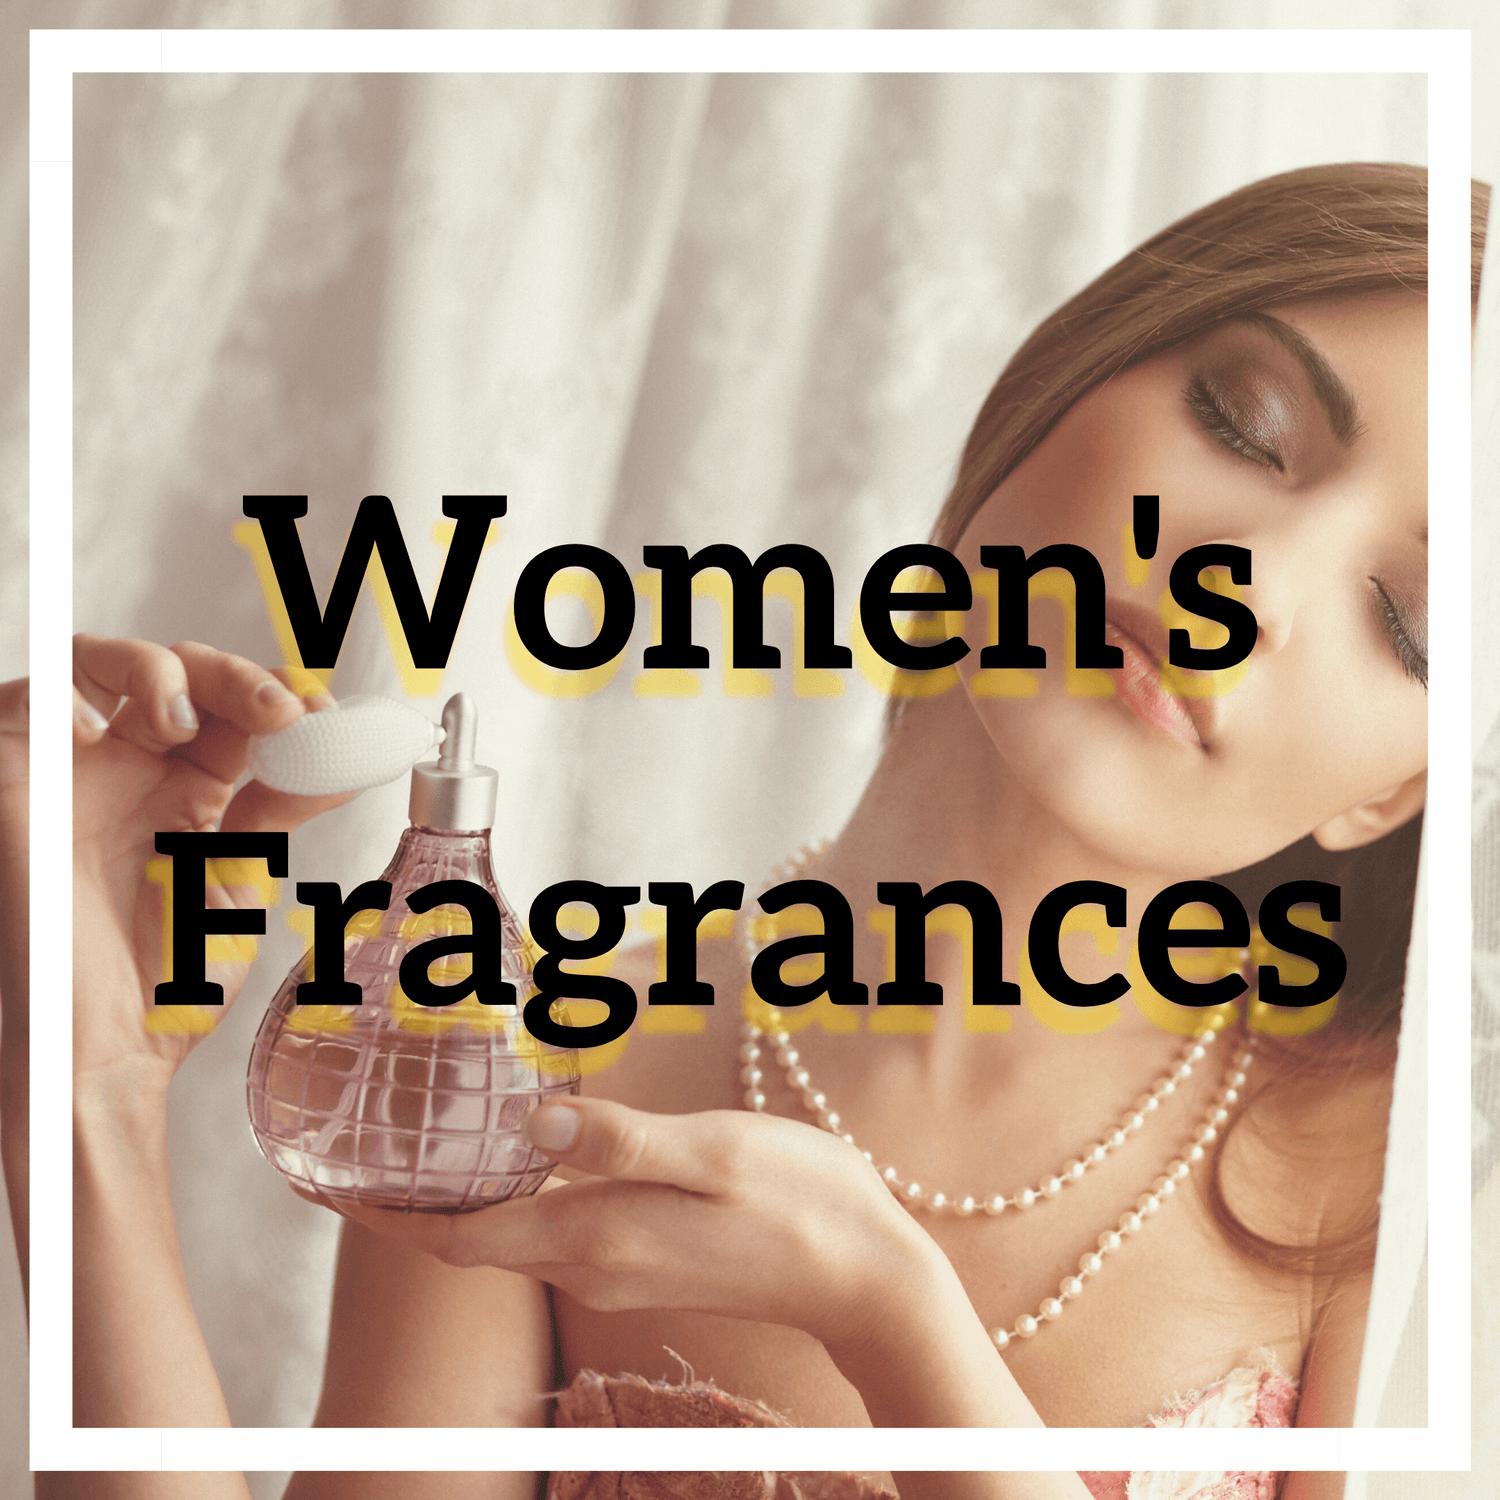 Women's fragrance - Ibn Al Jebouri Perfumes